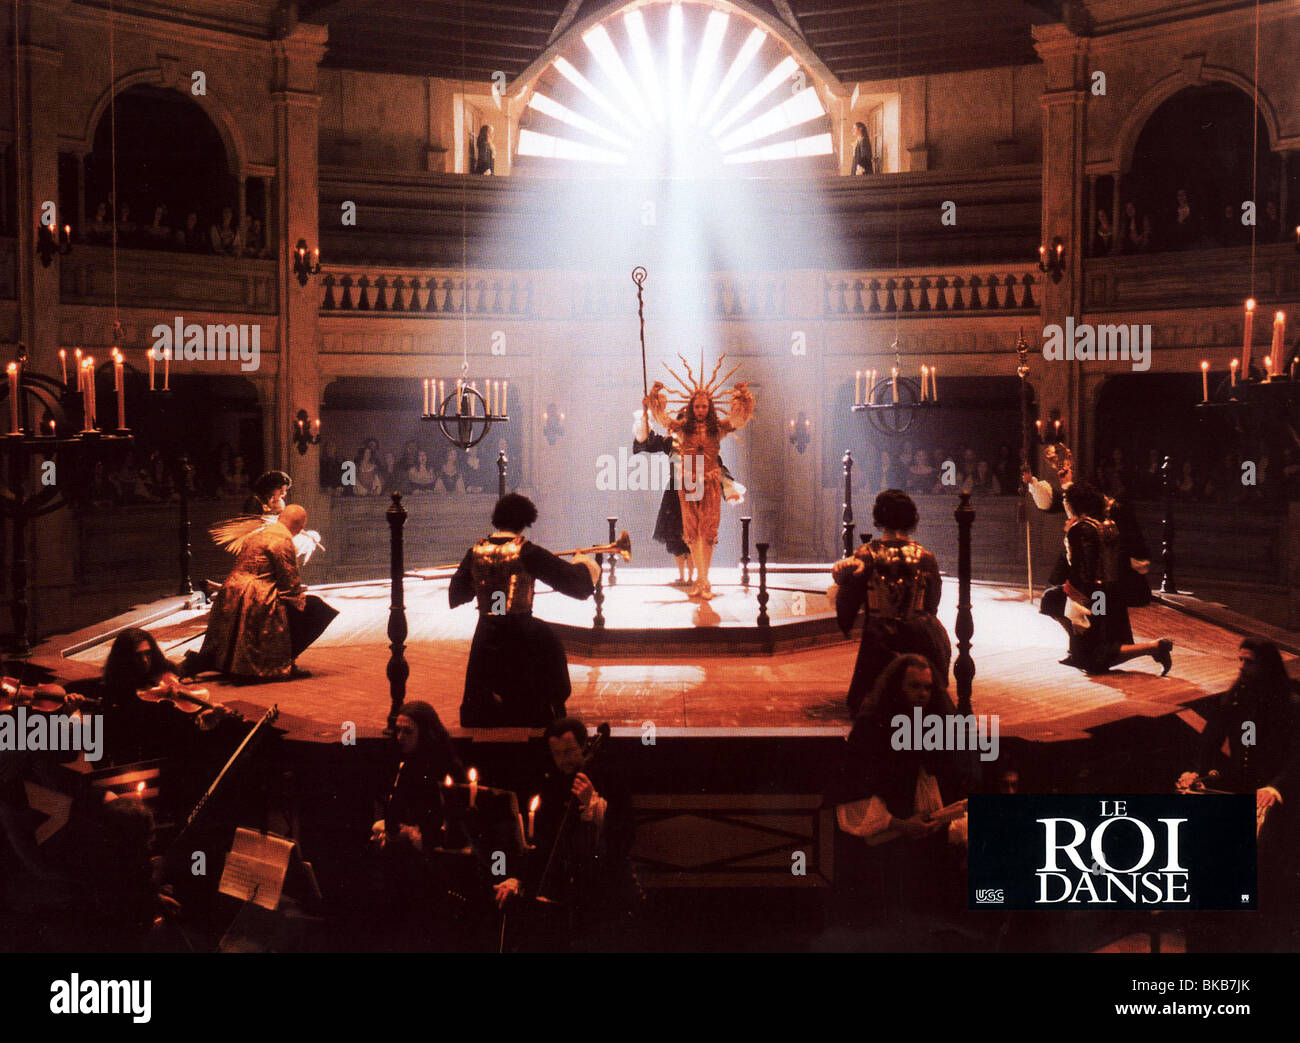 LE ROI DANSE (2000) THE KING IS DANCING (ALT) BENOIT MAGIMEL ROID 005FOH Stock Photo